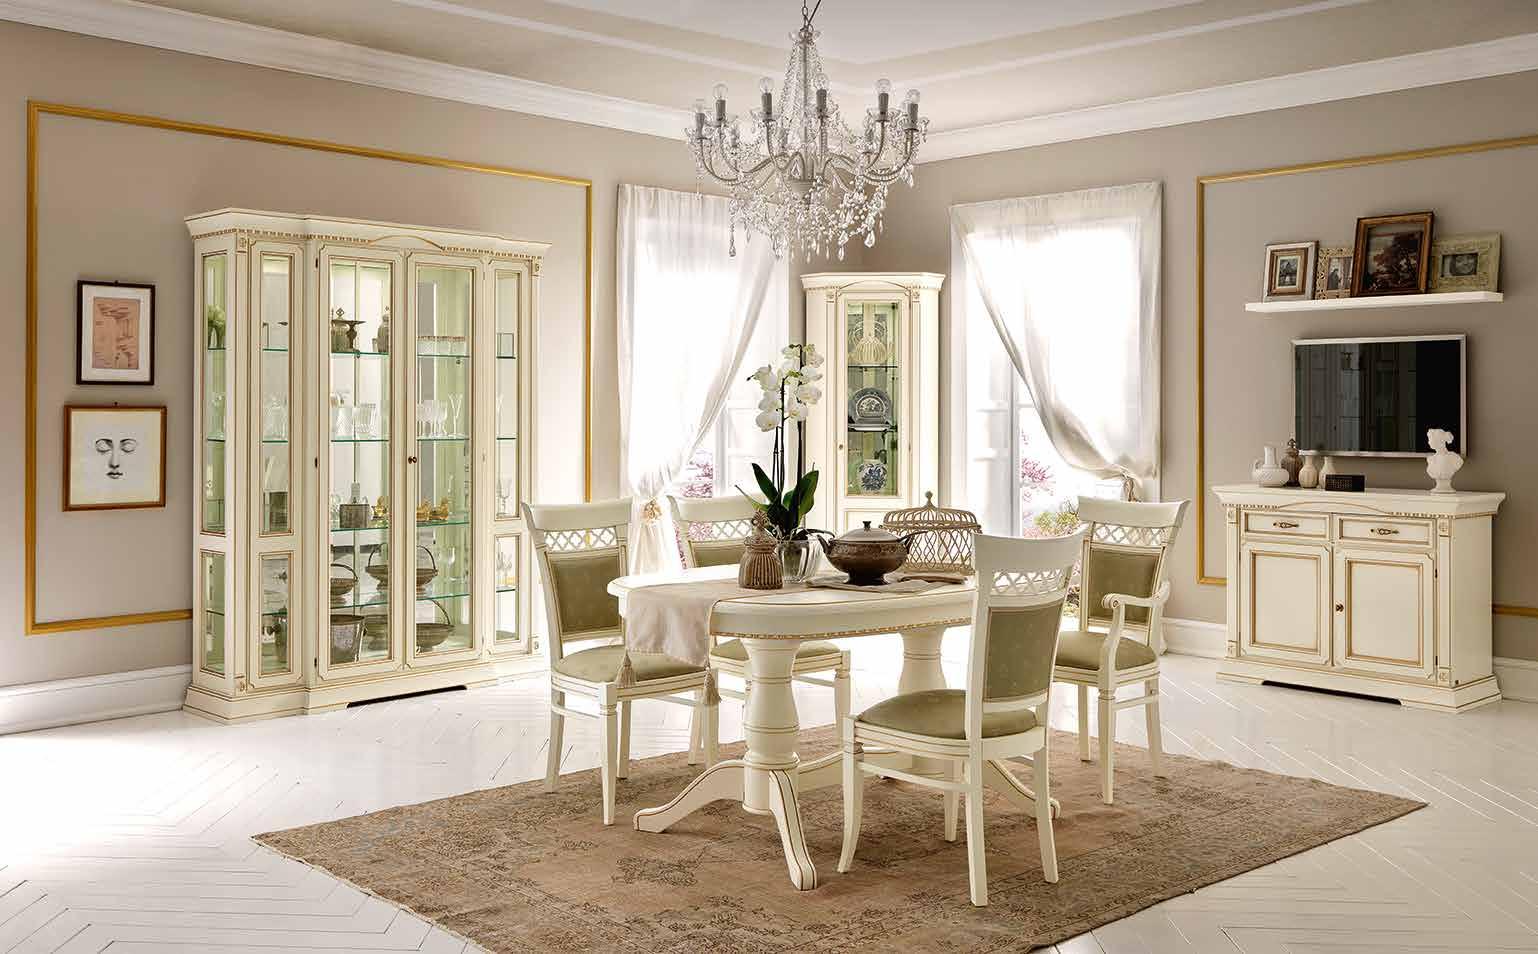 Комод Prama Palazzo Ducale laccato, 2-х дверный, цвет: белый с золотом, 114x52x94 см (71BO04)71BO04